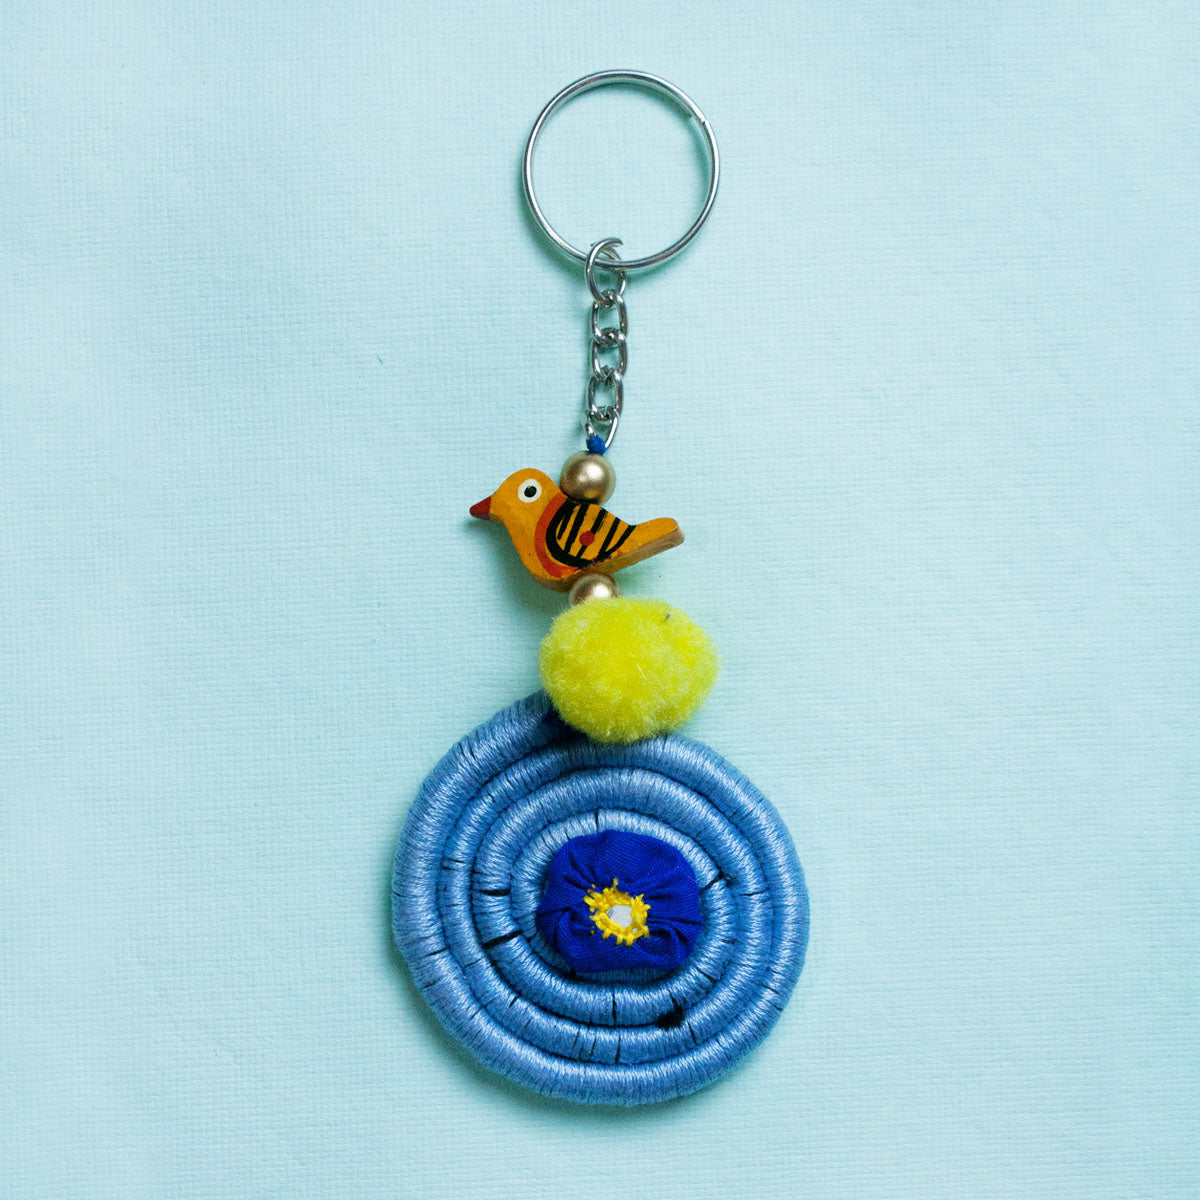 Blue Spiral Key ring/Bag Charm